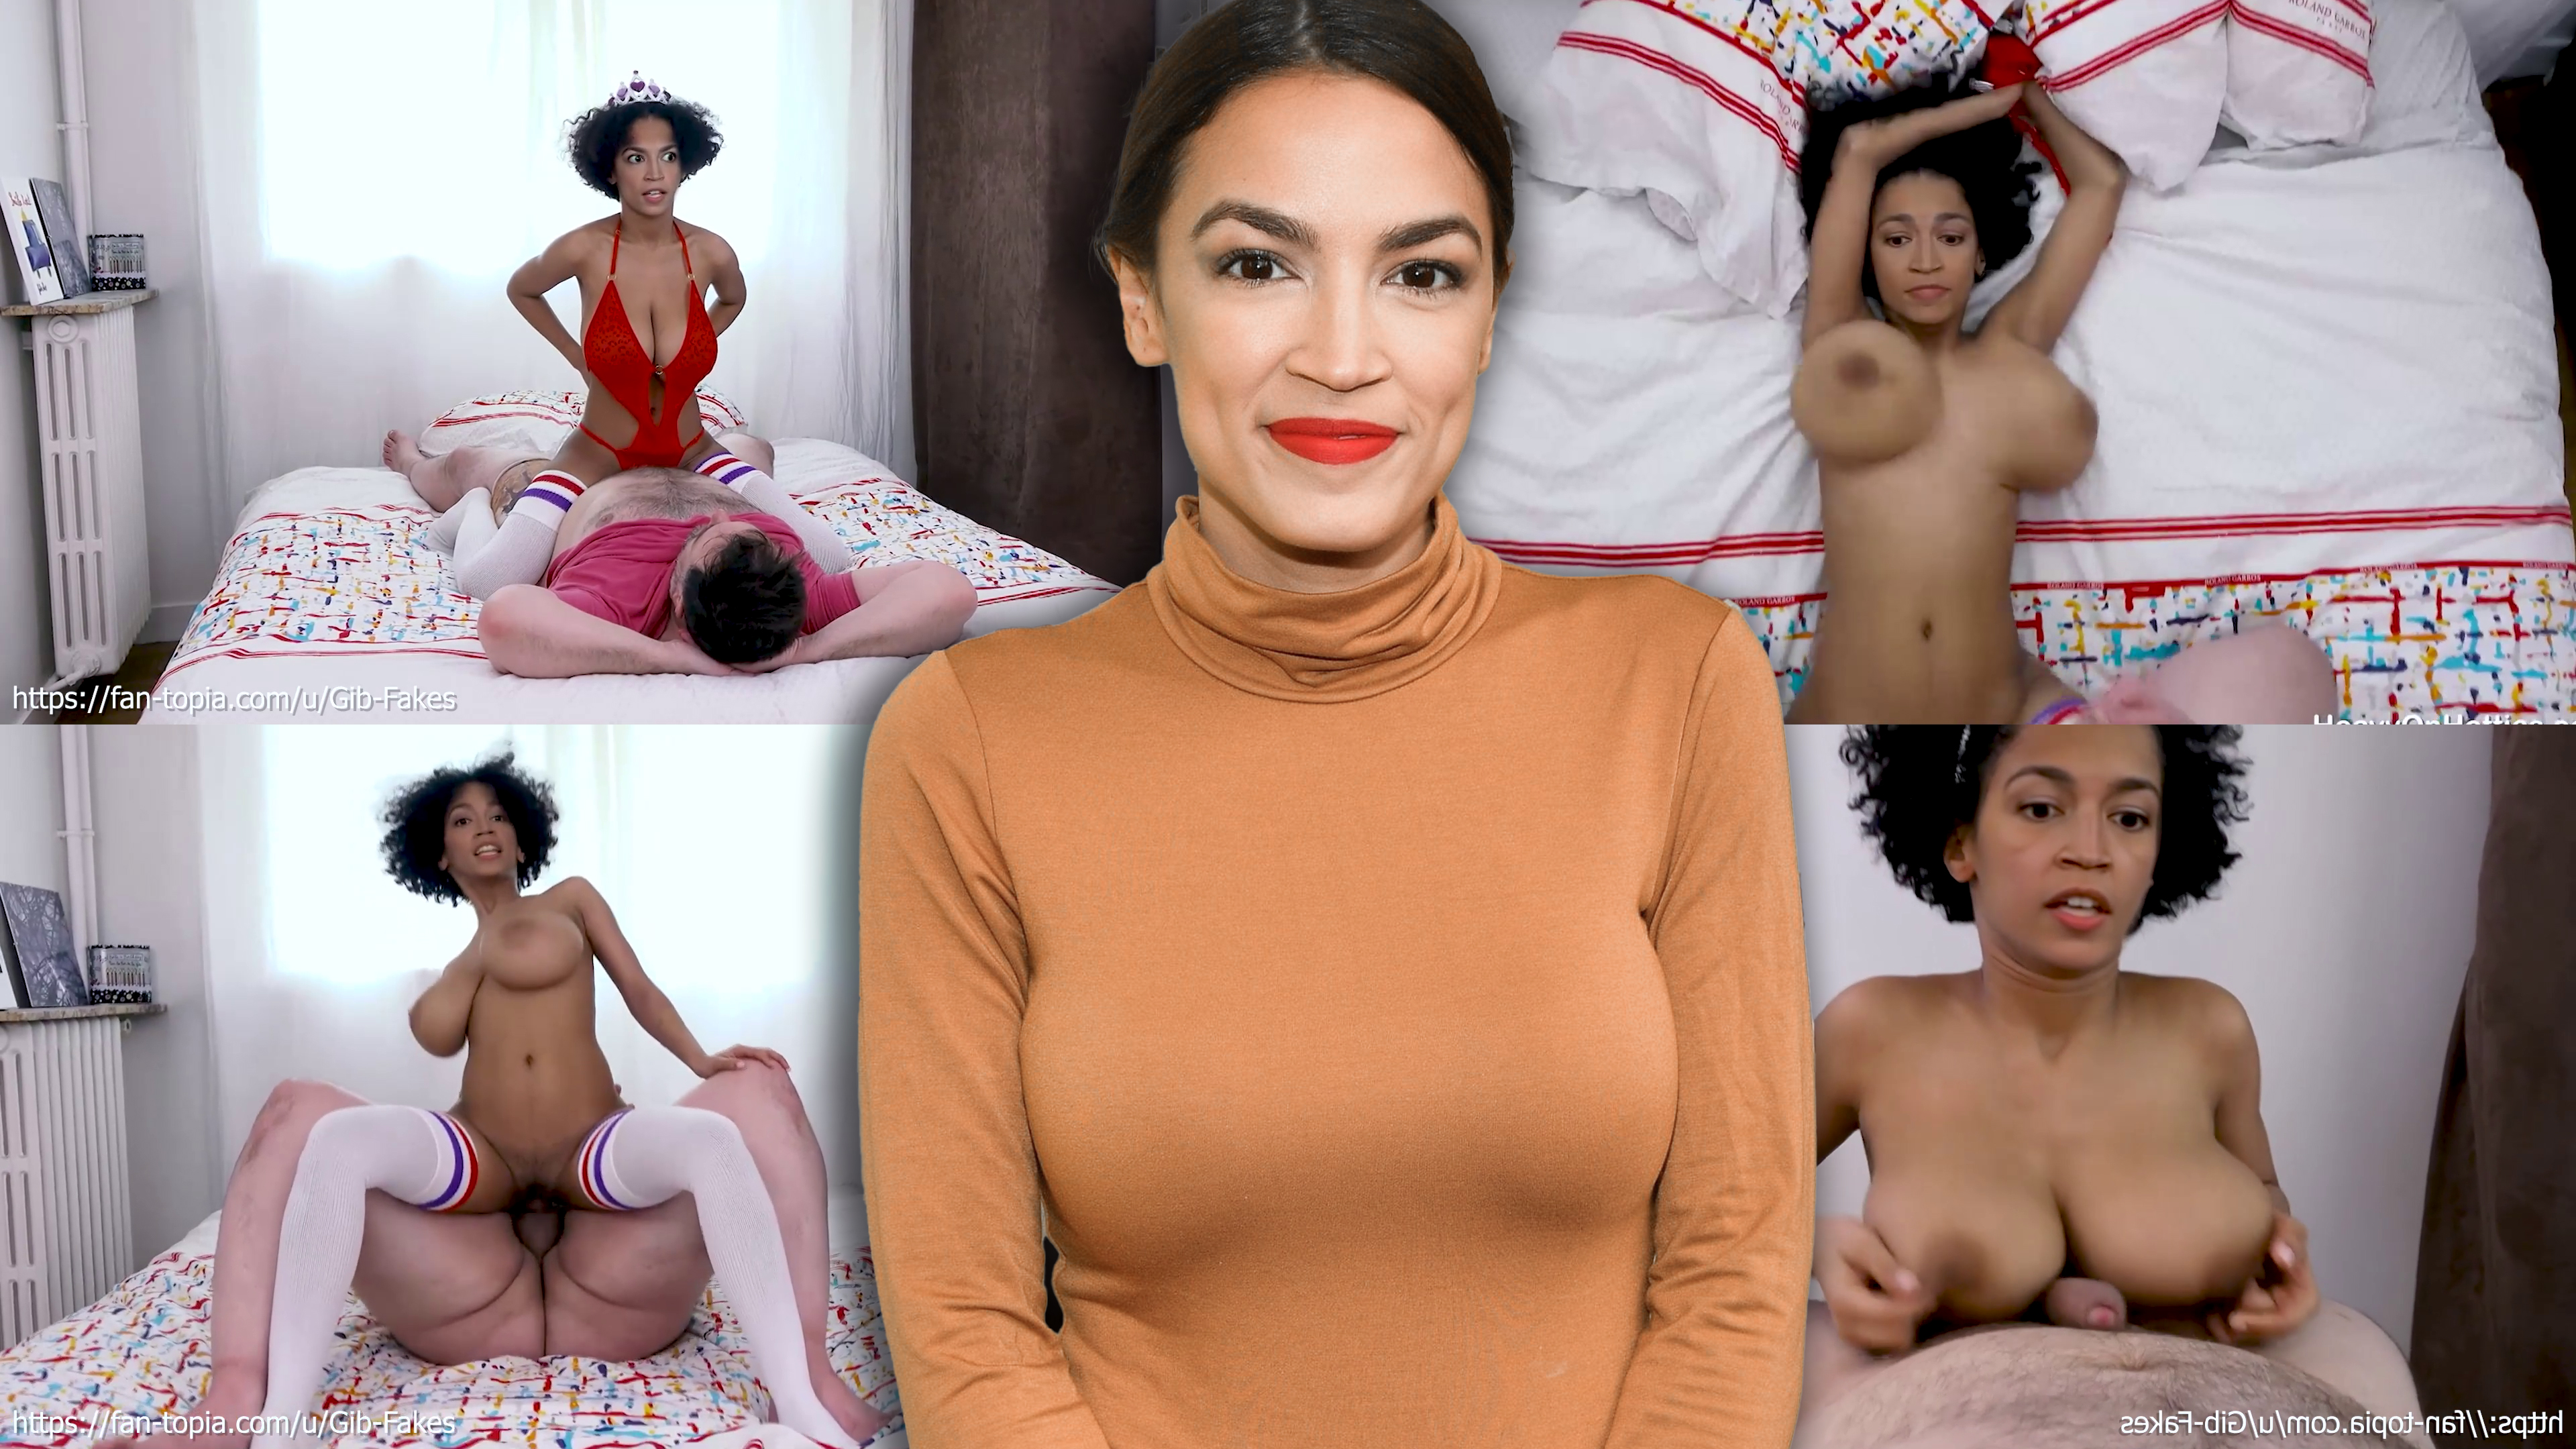 Alexandria Ocasio-Cortez (AOC) as a Black Woman with Perfect Tits